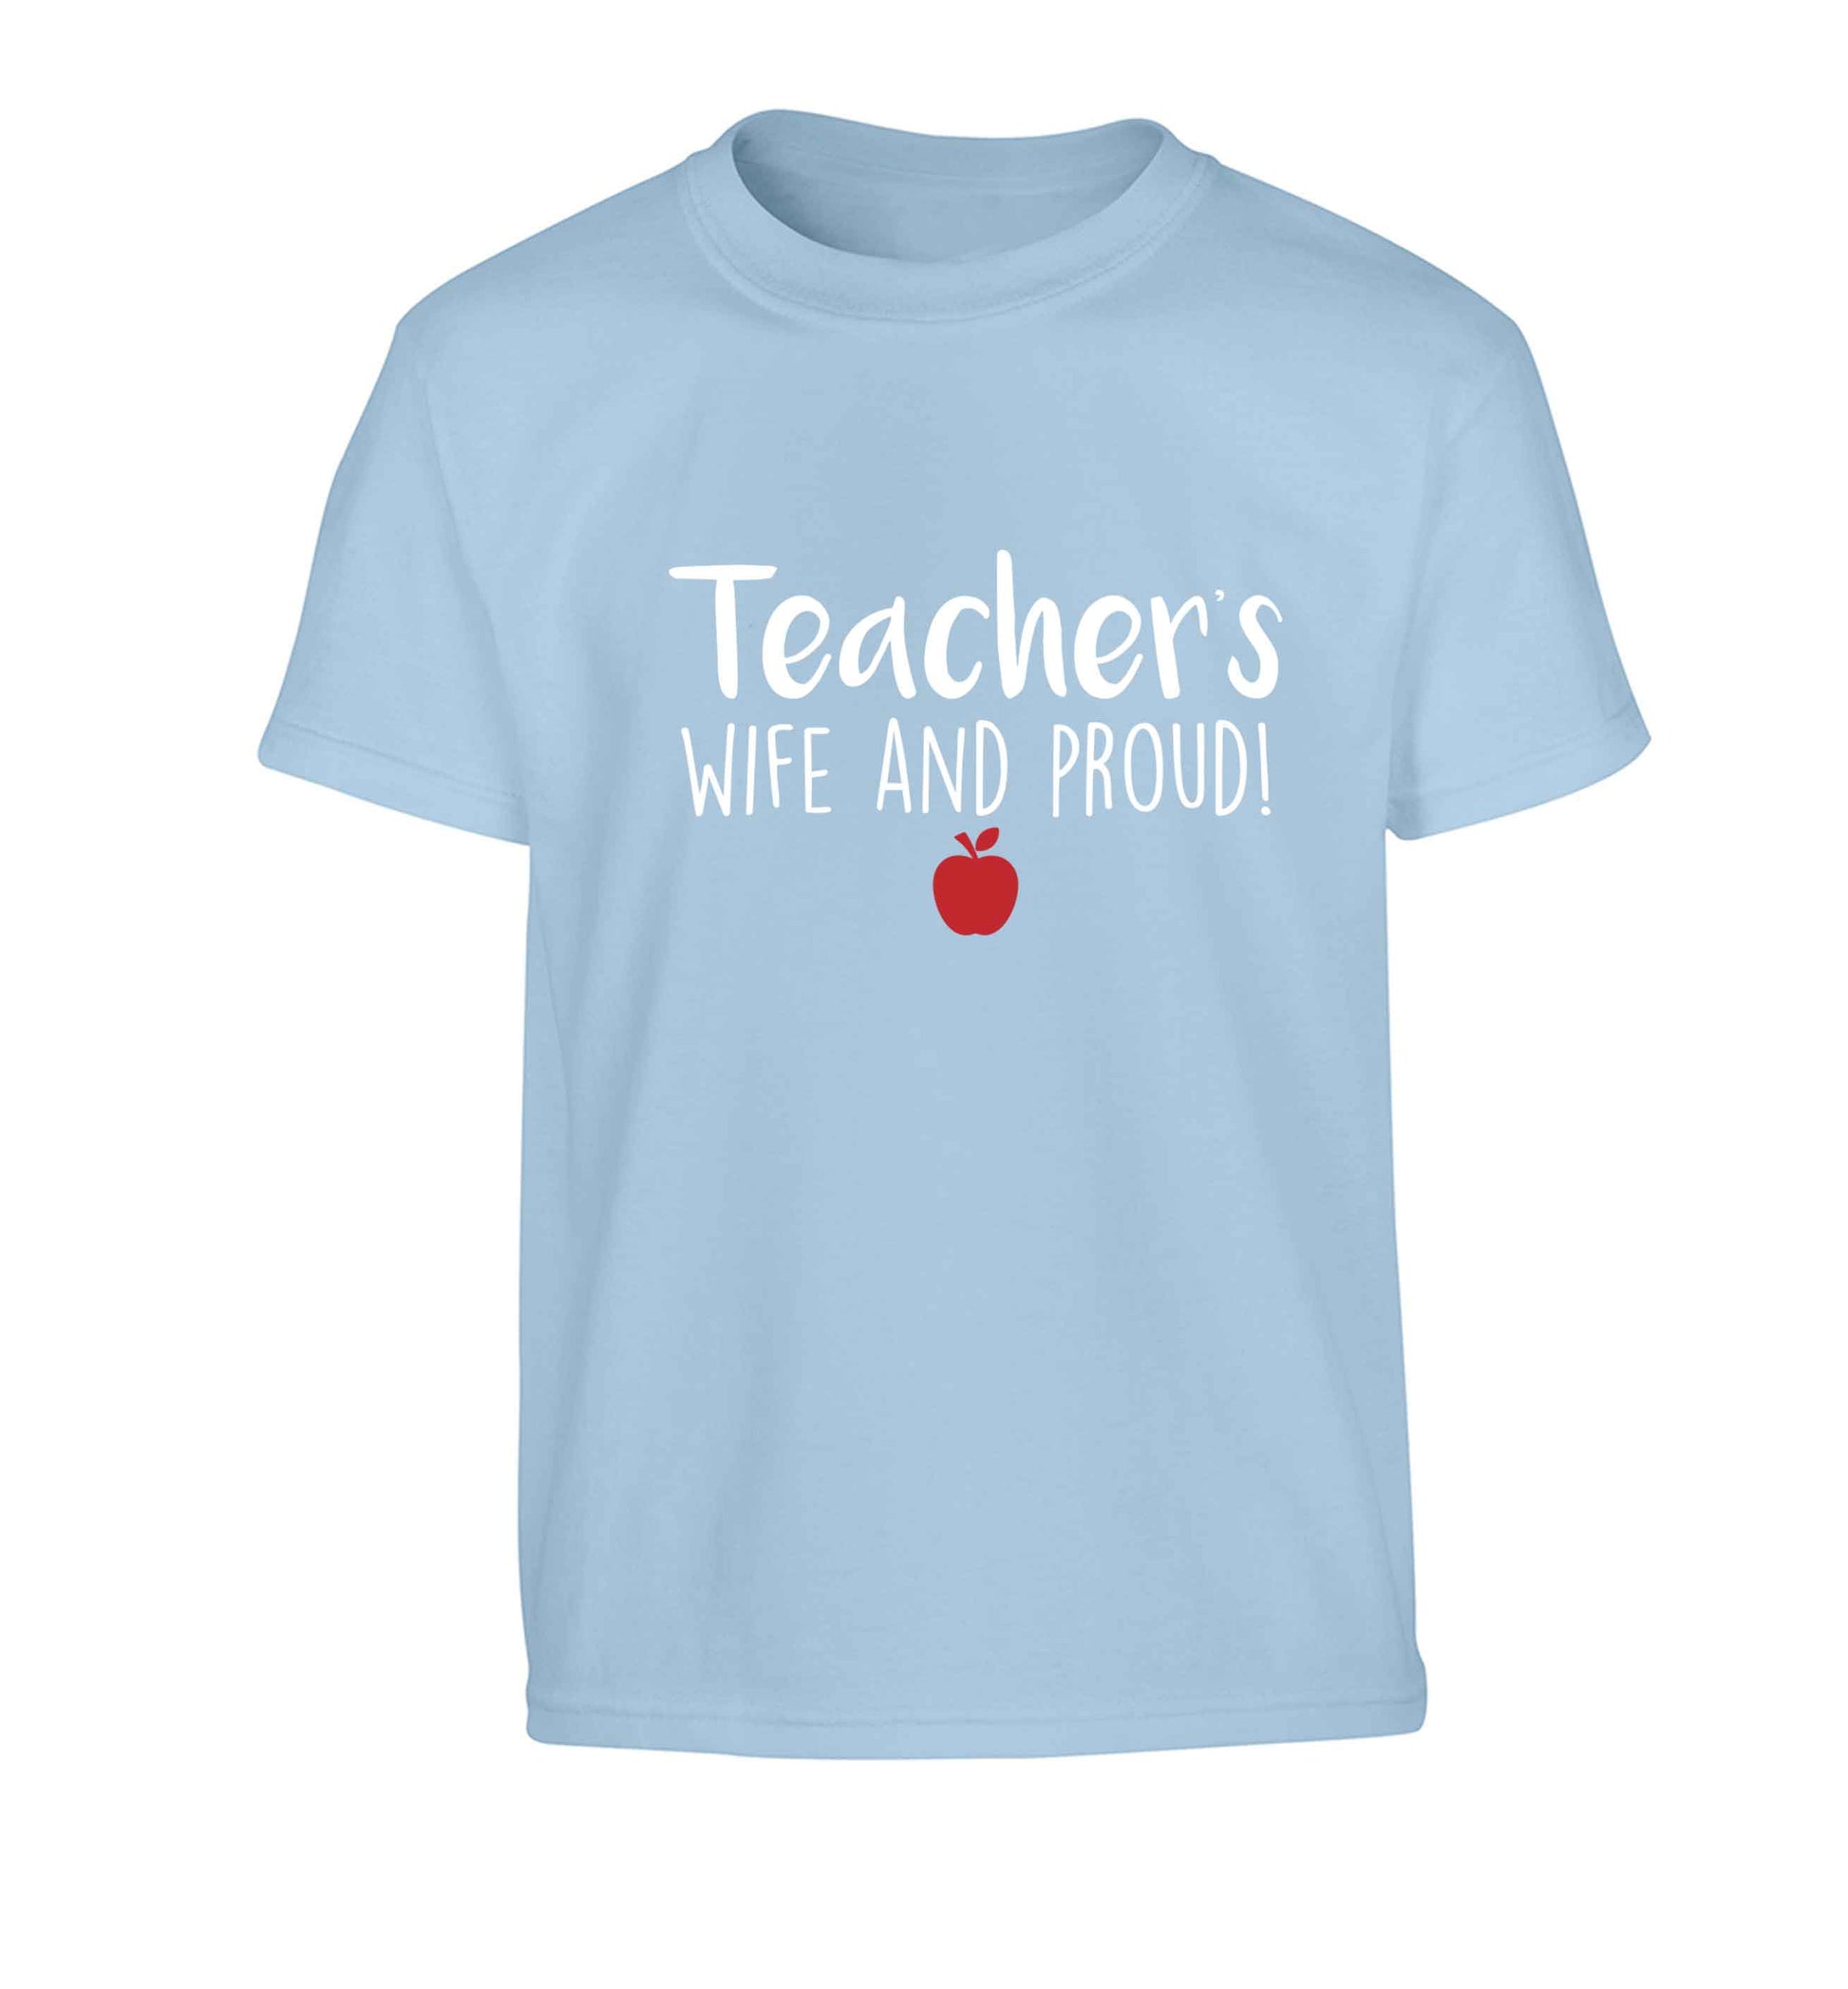 Teachers wife and proud Children's light blue Tshirt 12-13 Years